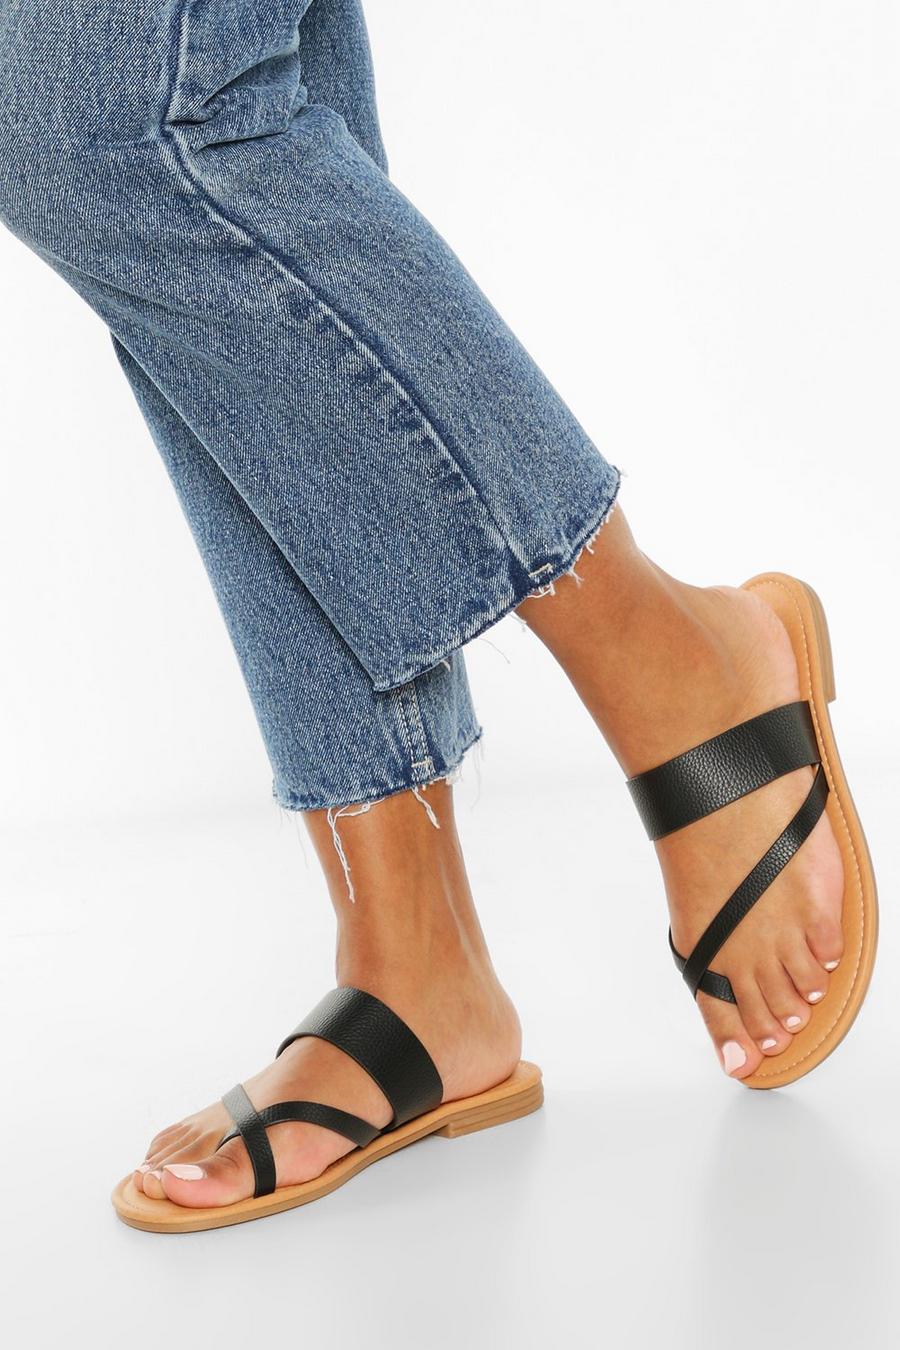 Black Toe Post Sandals